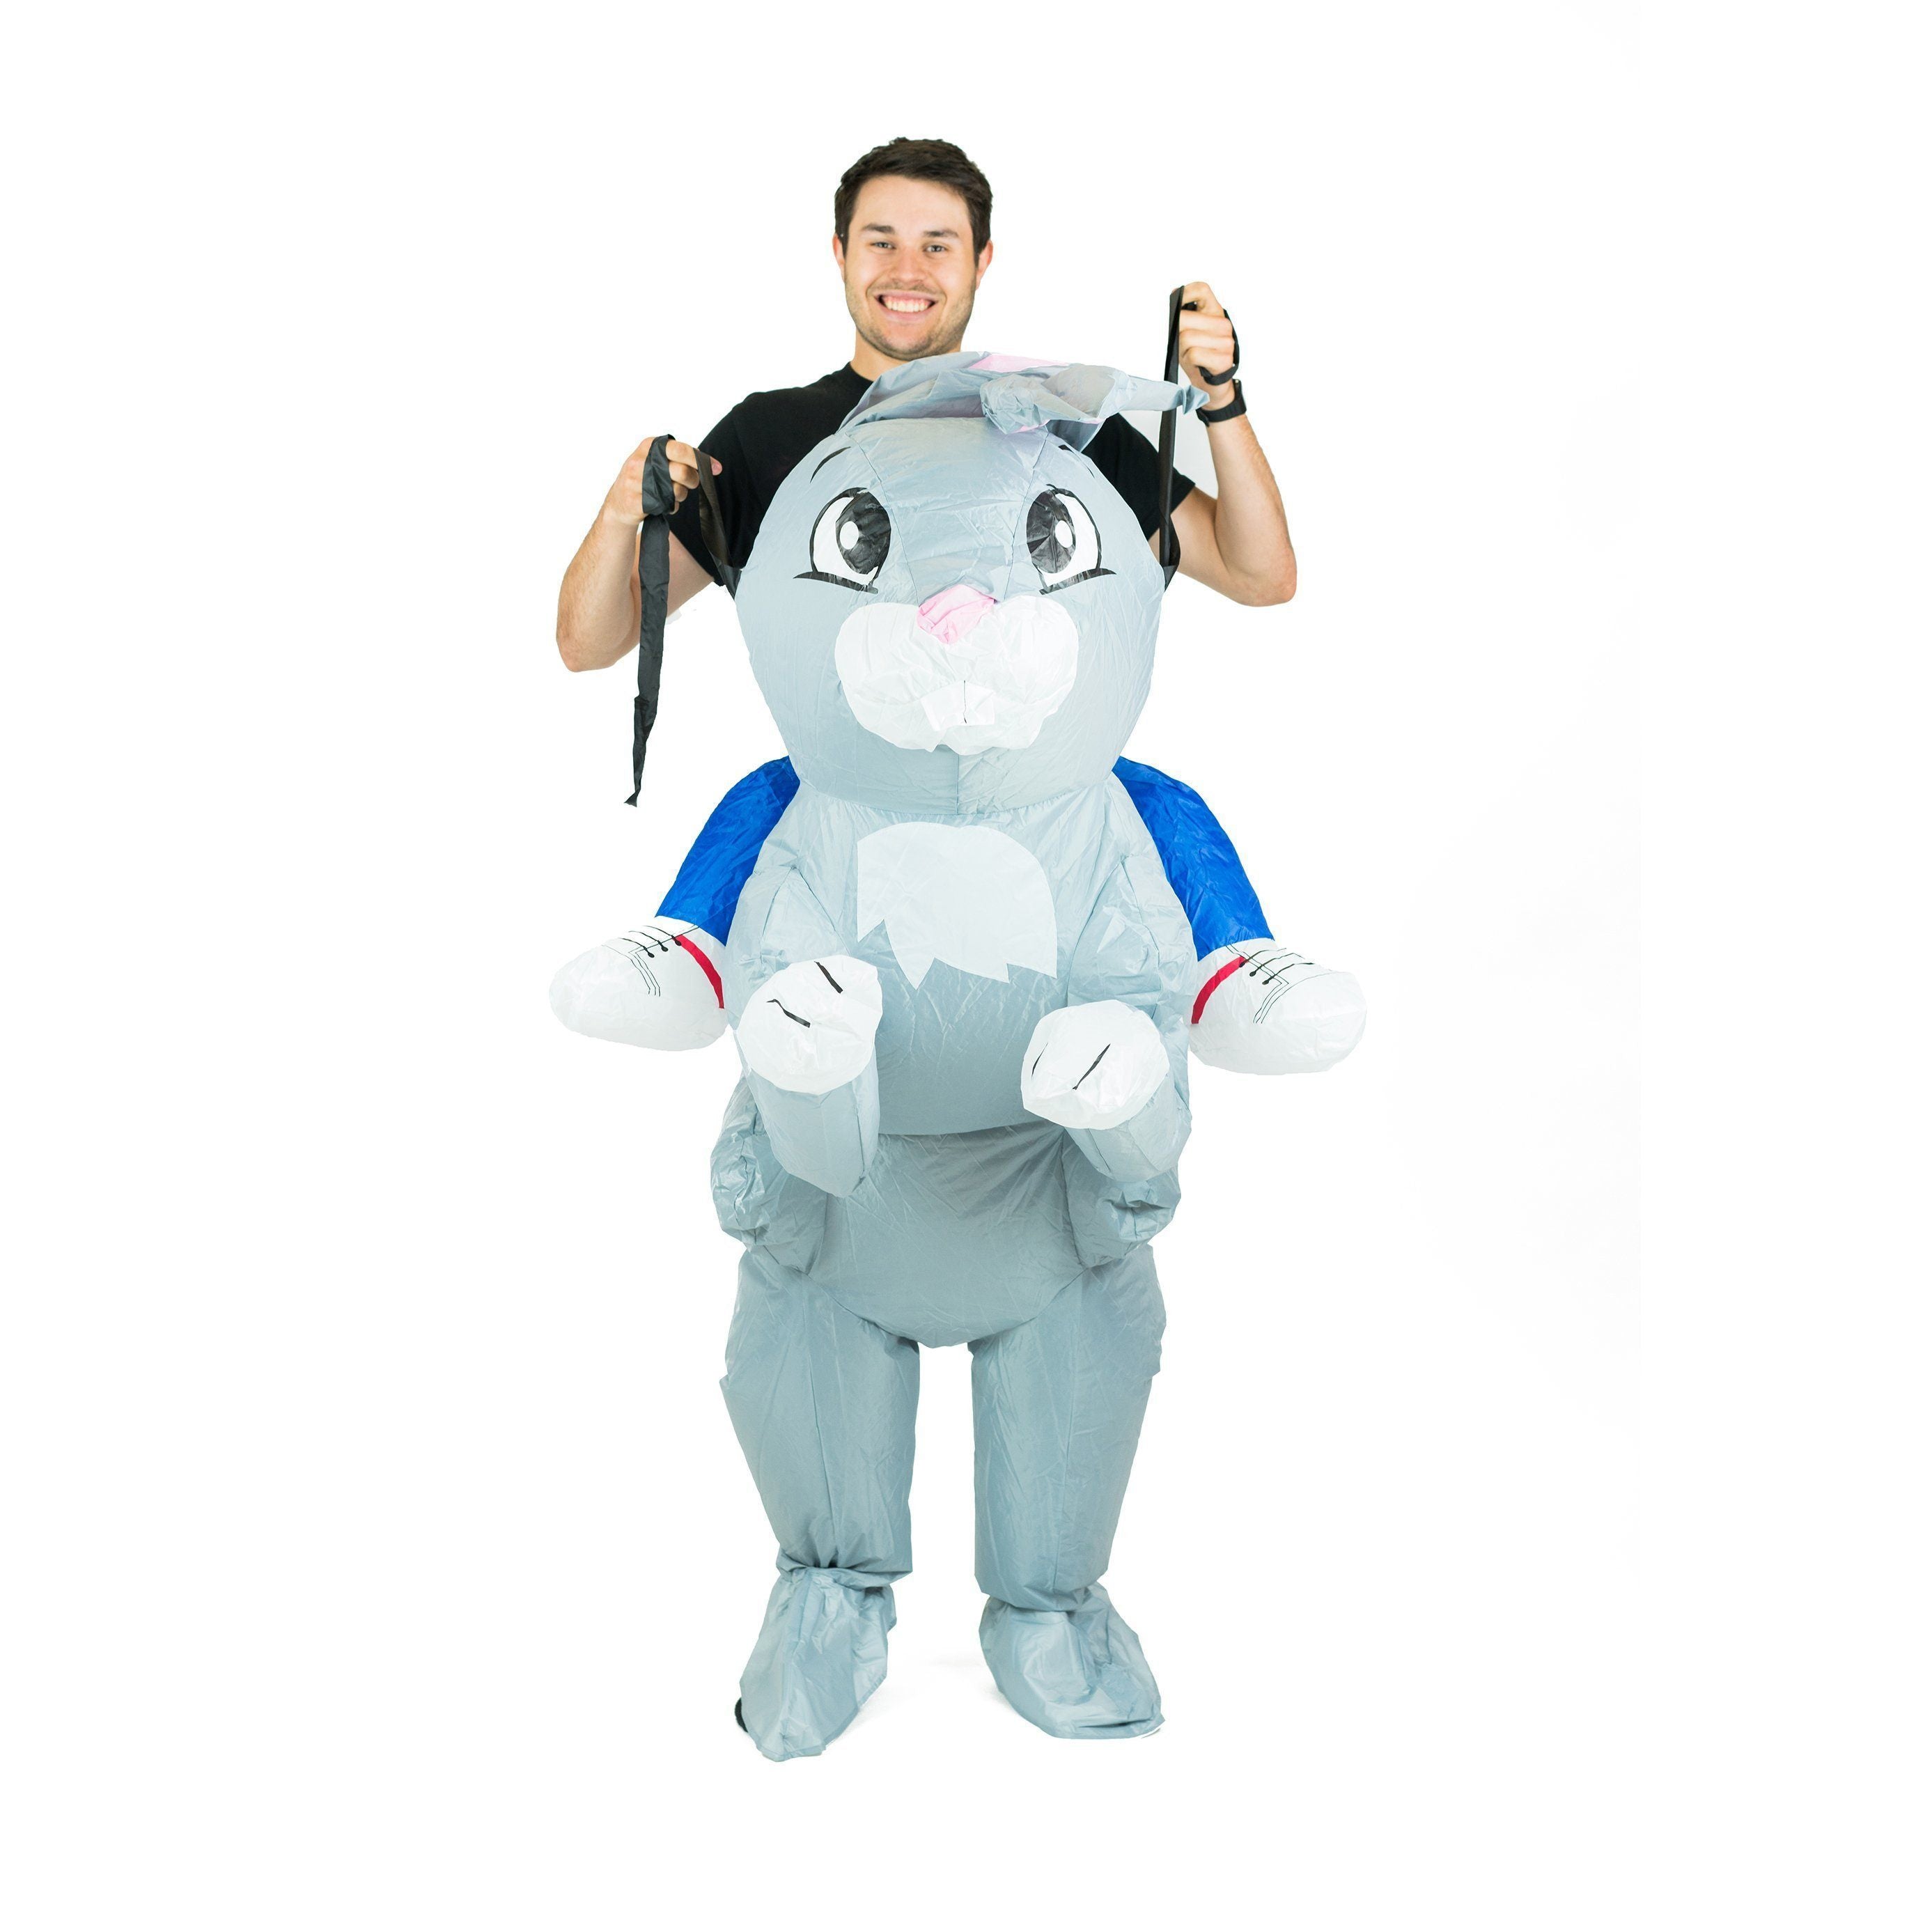 Fancy Dress - Inflatable Rabbit Costume